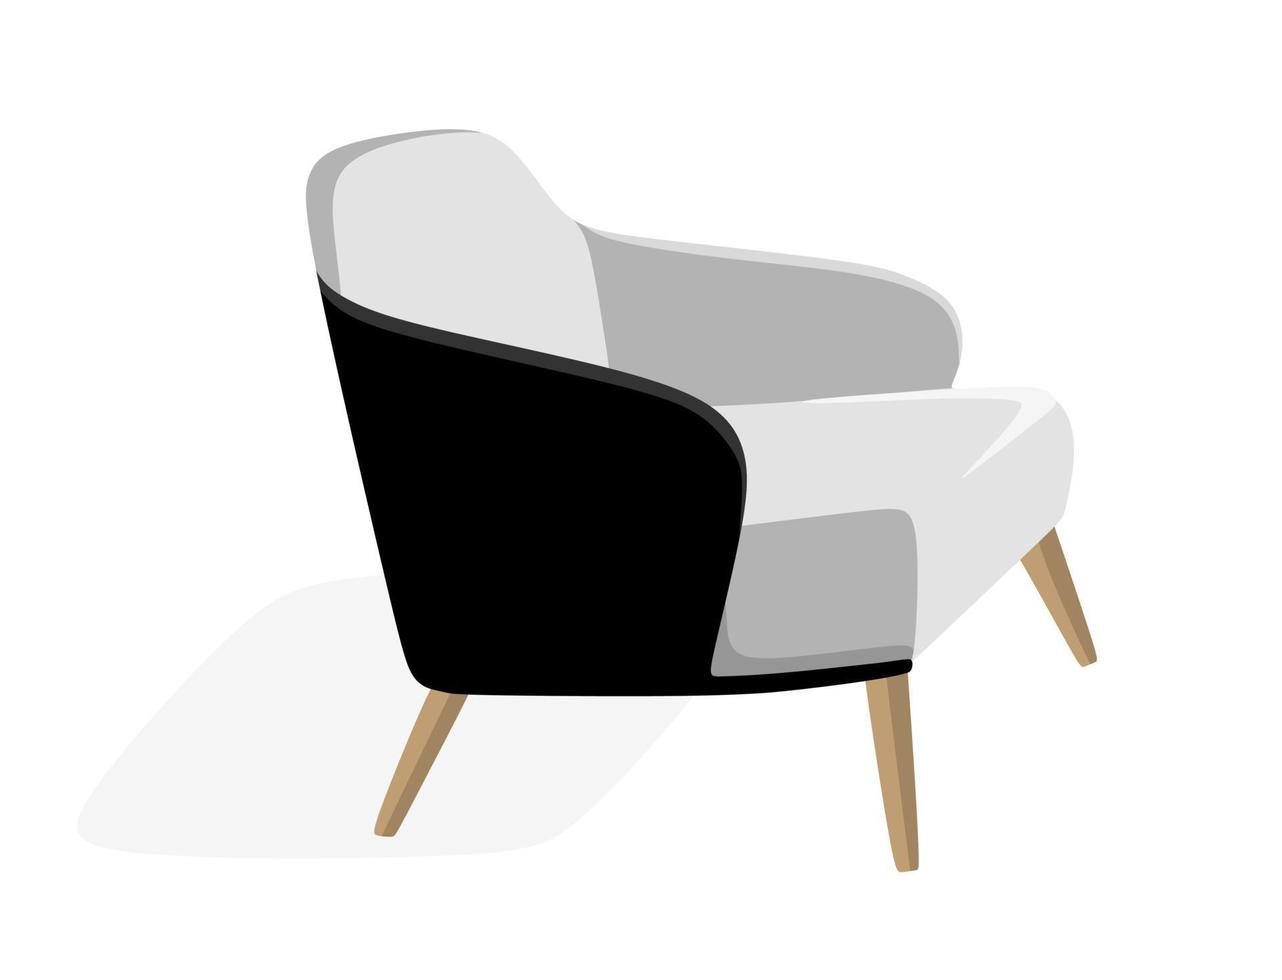 sillón muebles interiores modernos ilustración vectorial en un estilo plano aislado vector